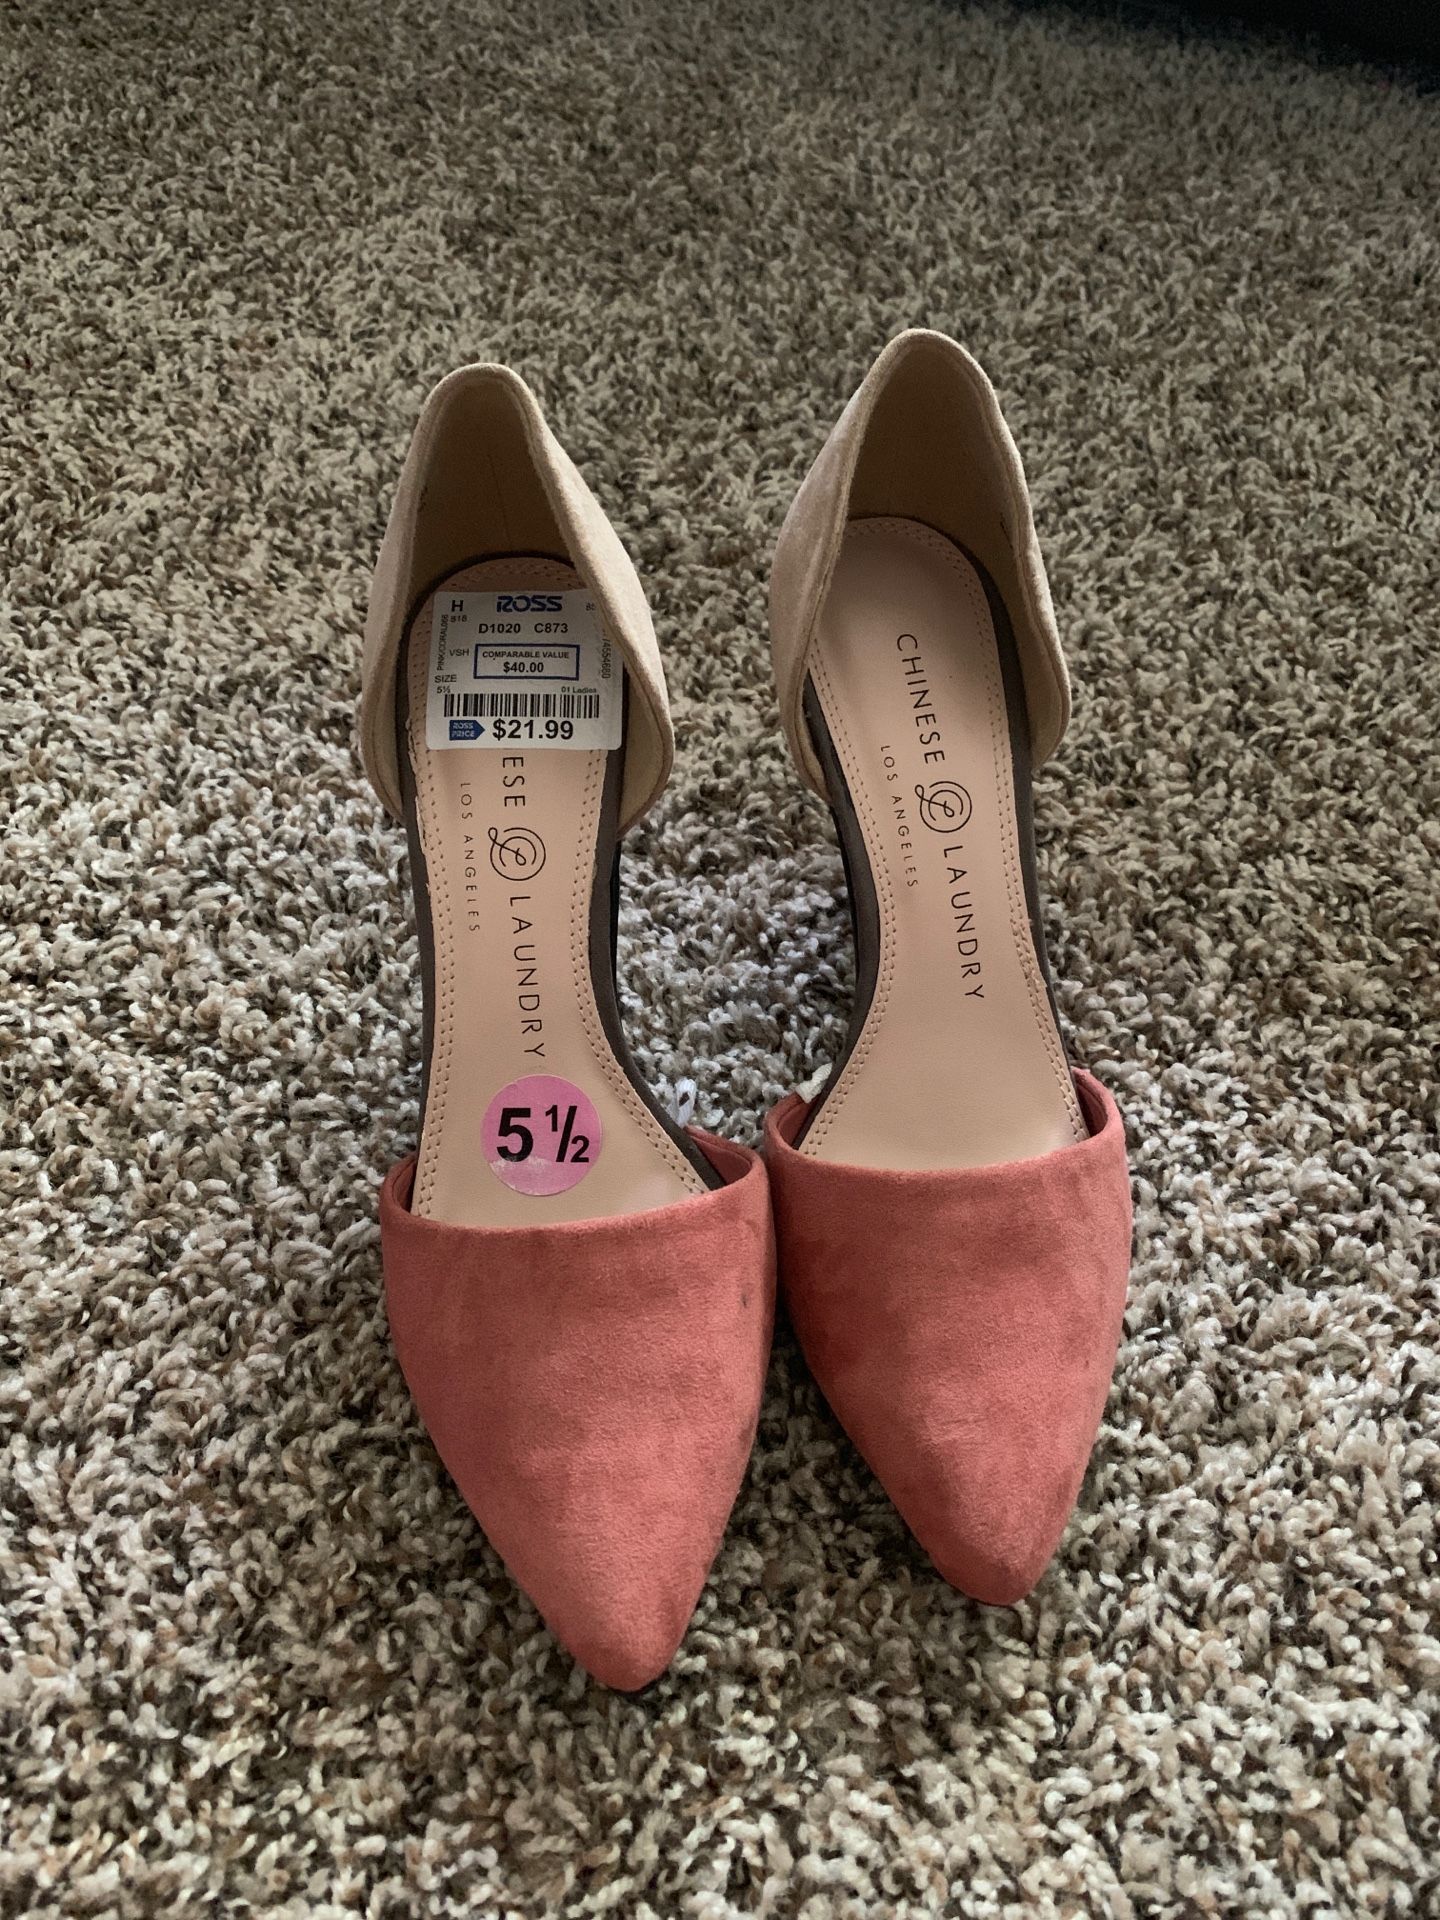 New Pink and beige suede 4” heels Size 5 1/2